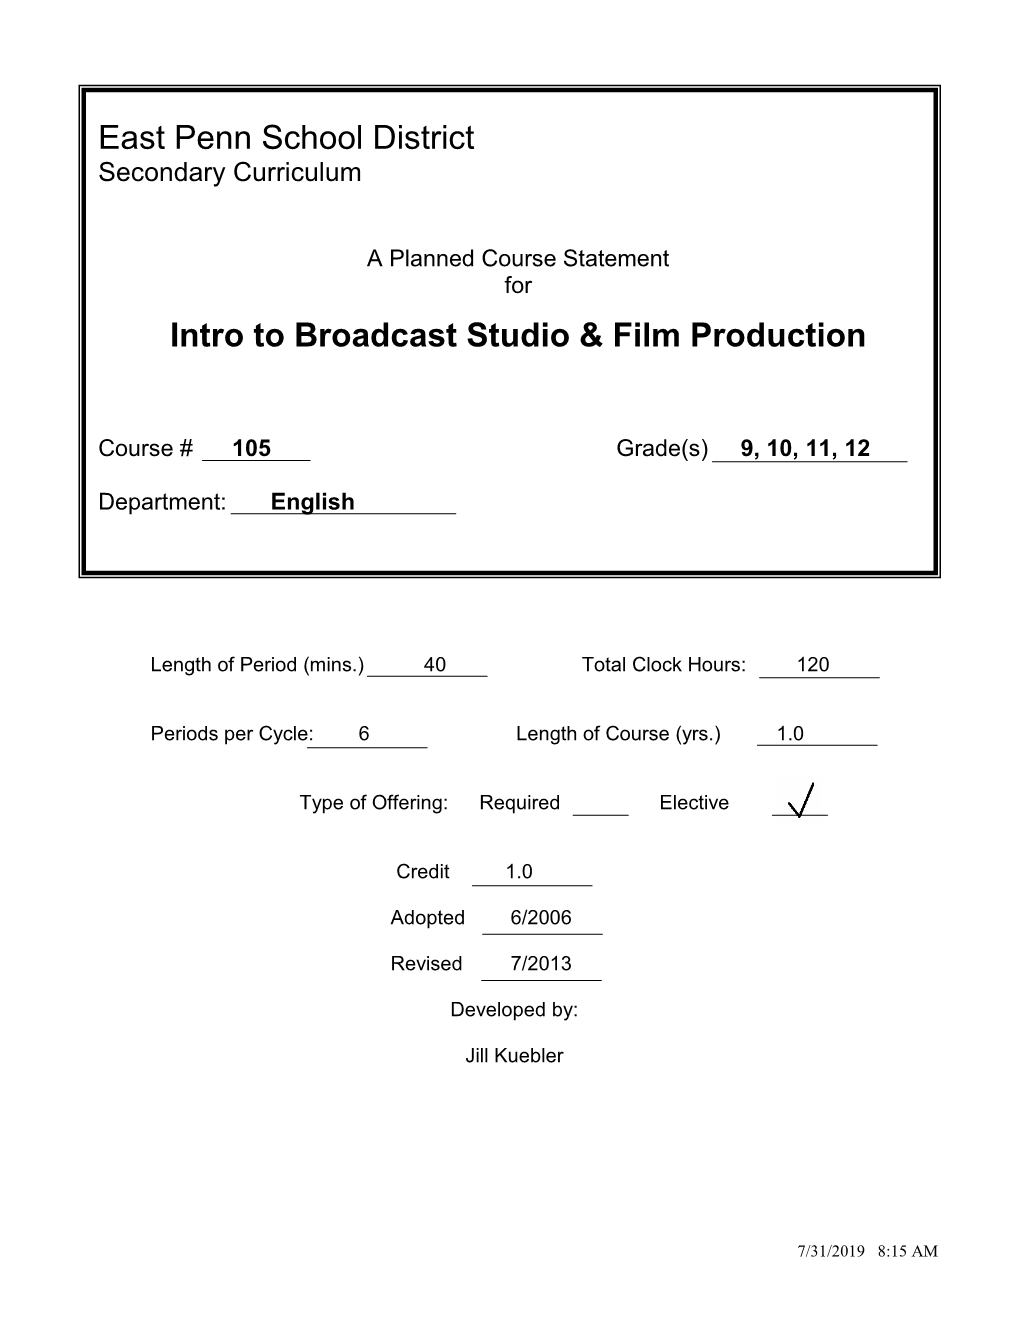 East Penn School District Intro to Broadcast Studio & Film Production